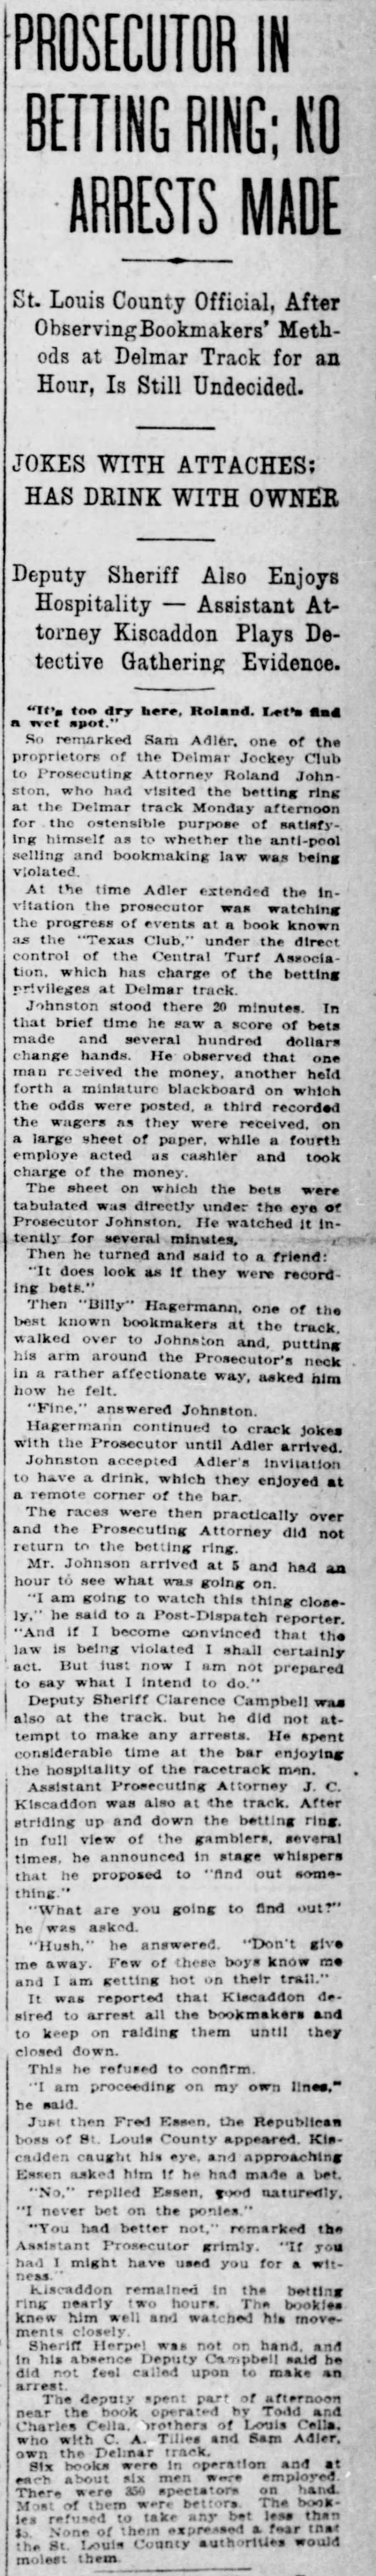 Prosecutor at Ring, No Arrests, 1905